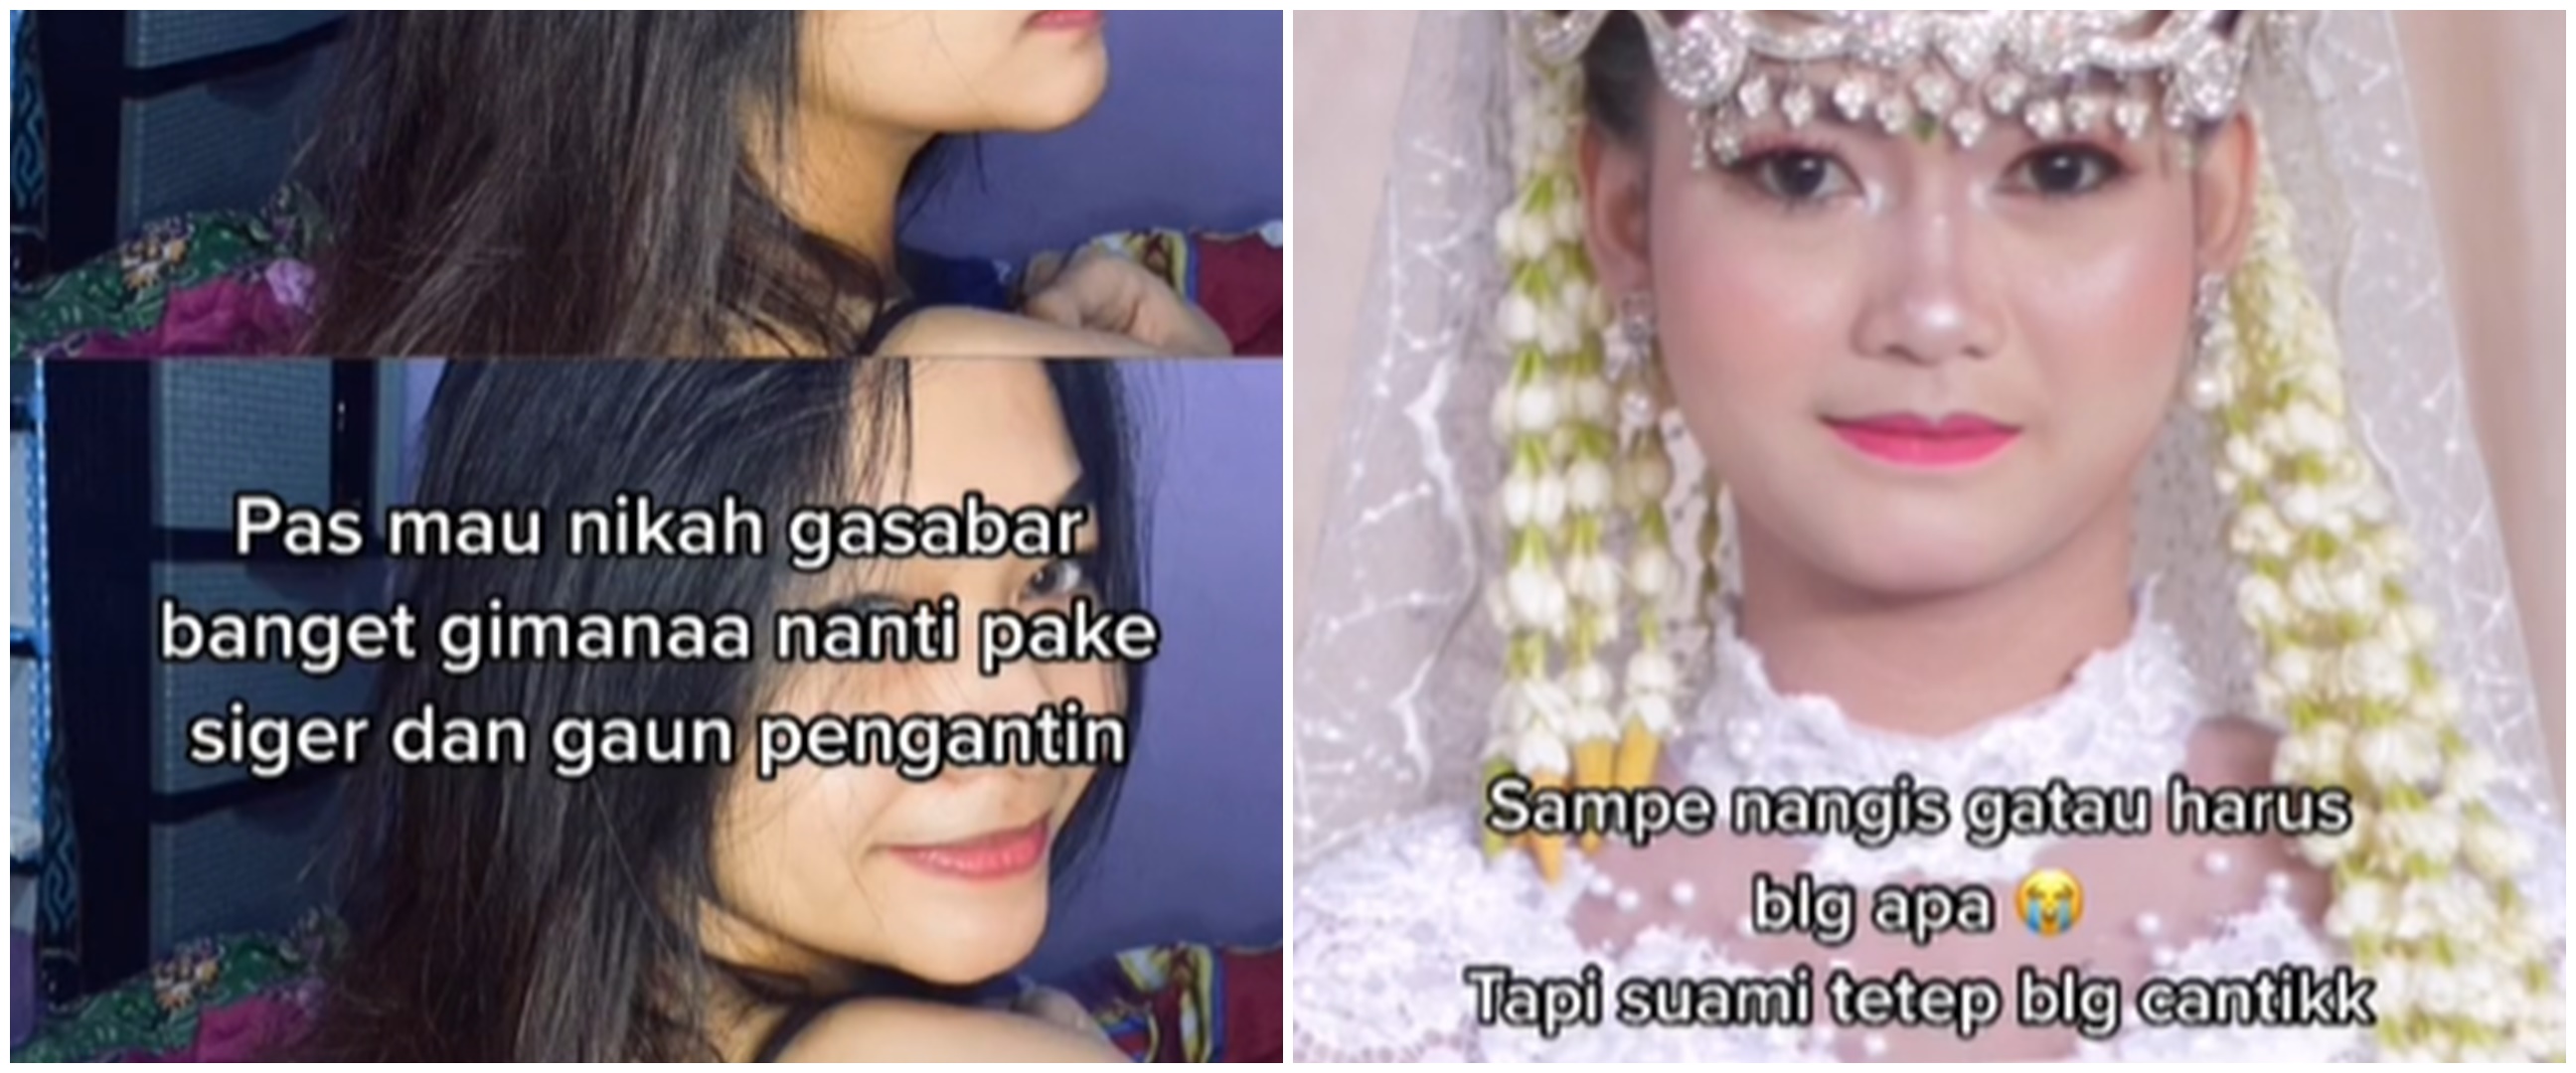 Curhat pengantin makeup ulang karena permintaan mertua, nyesek